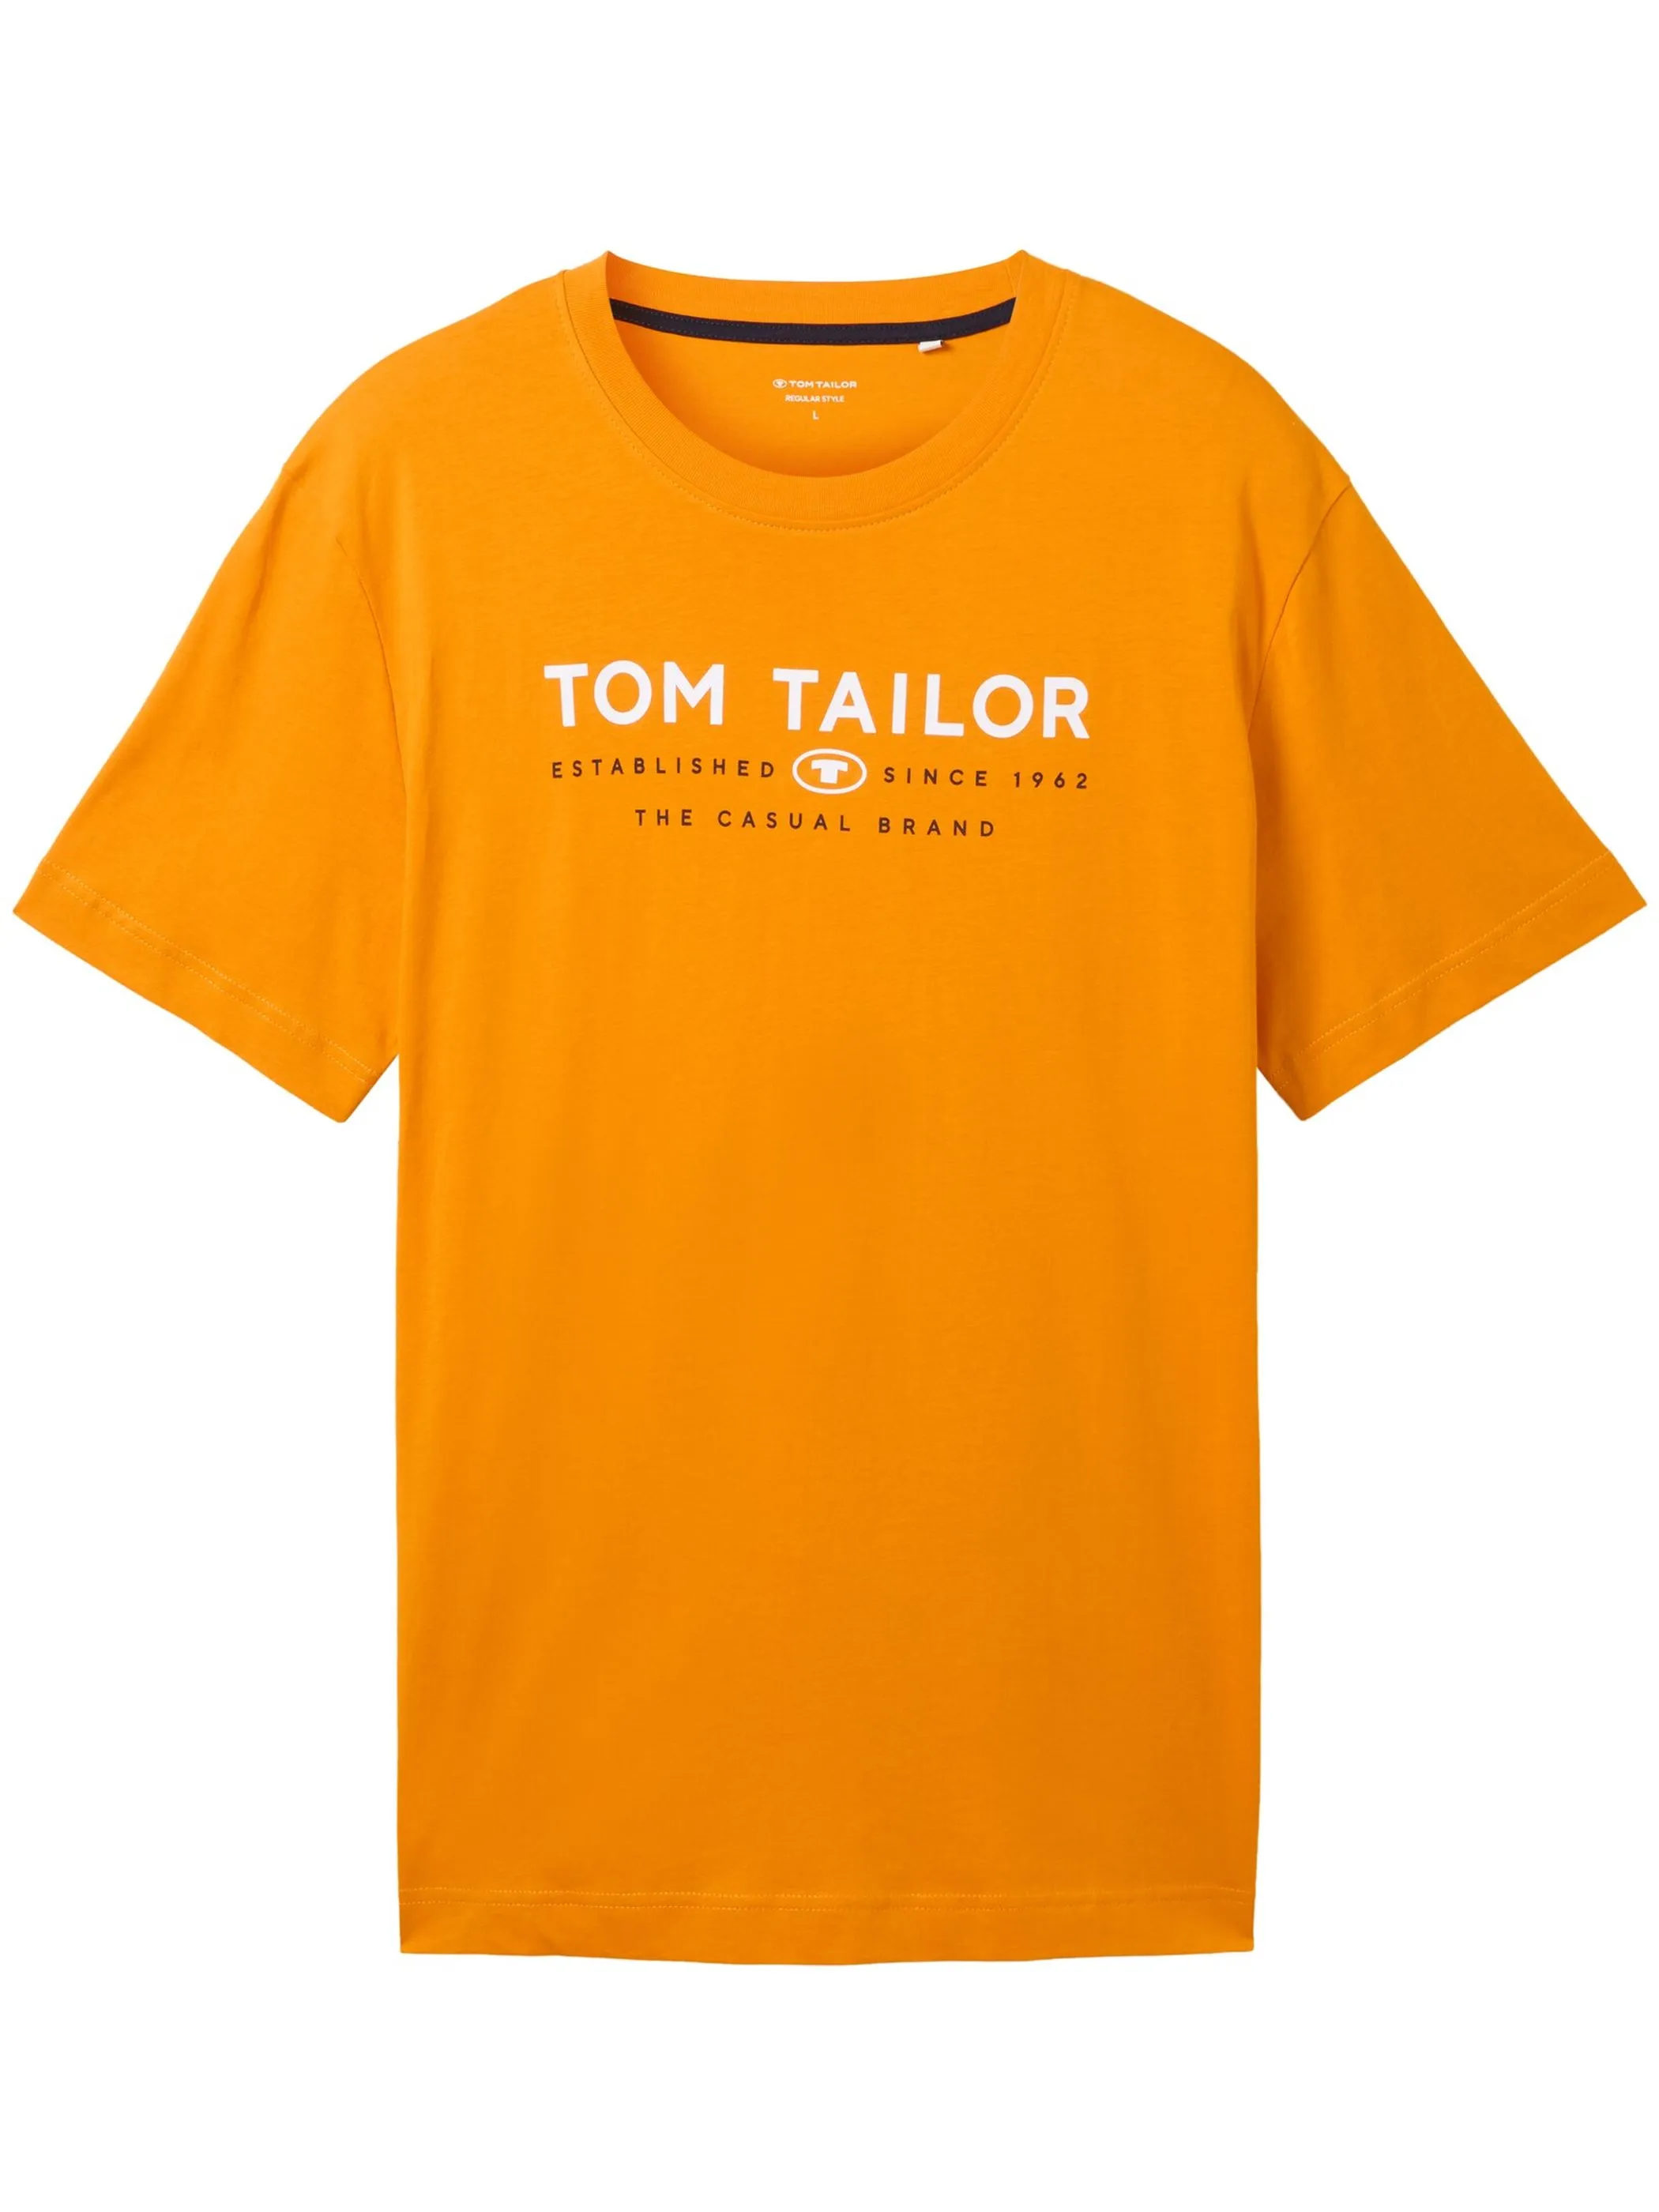 Tom Tailor 1043276 t-shirt with print Orange 898849 12392 1